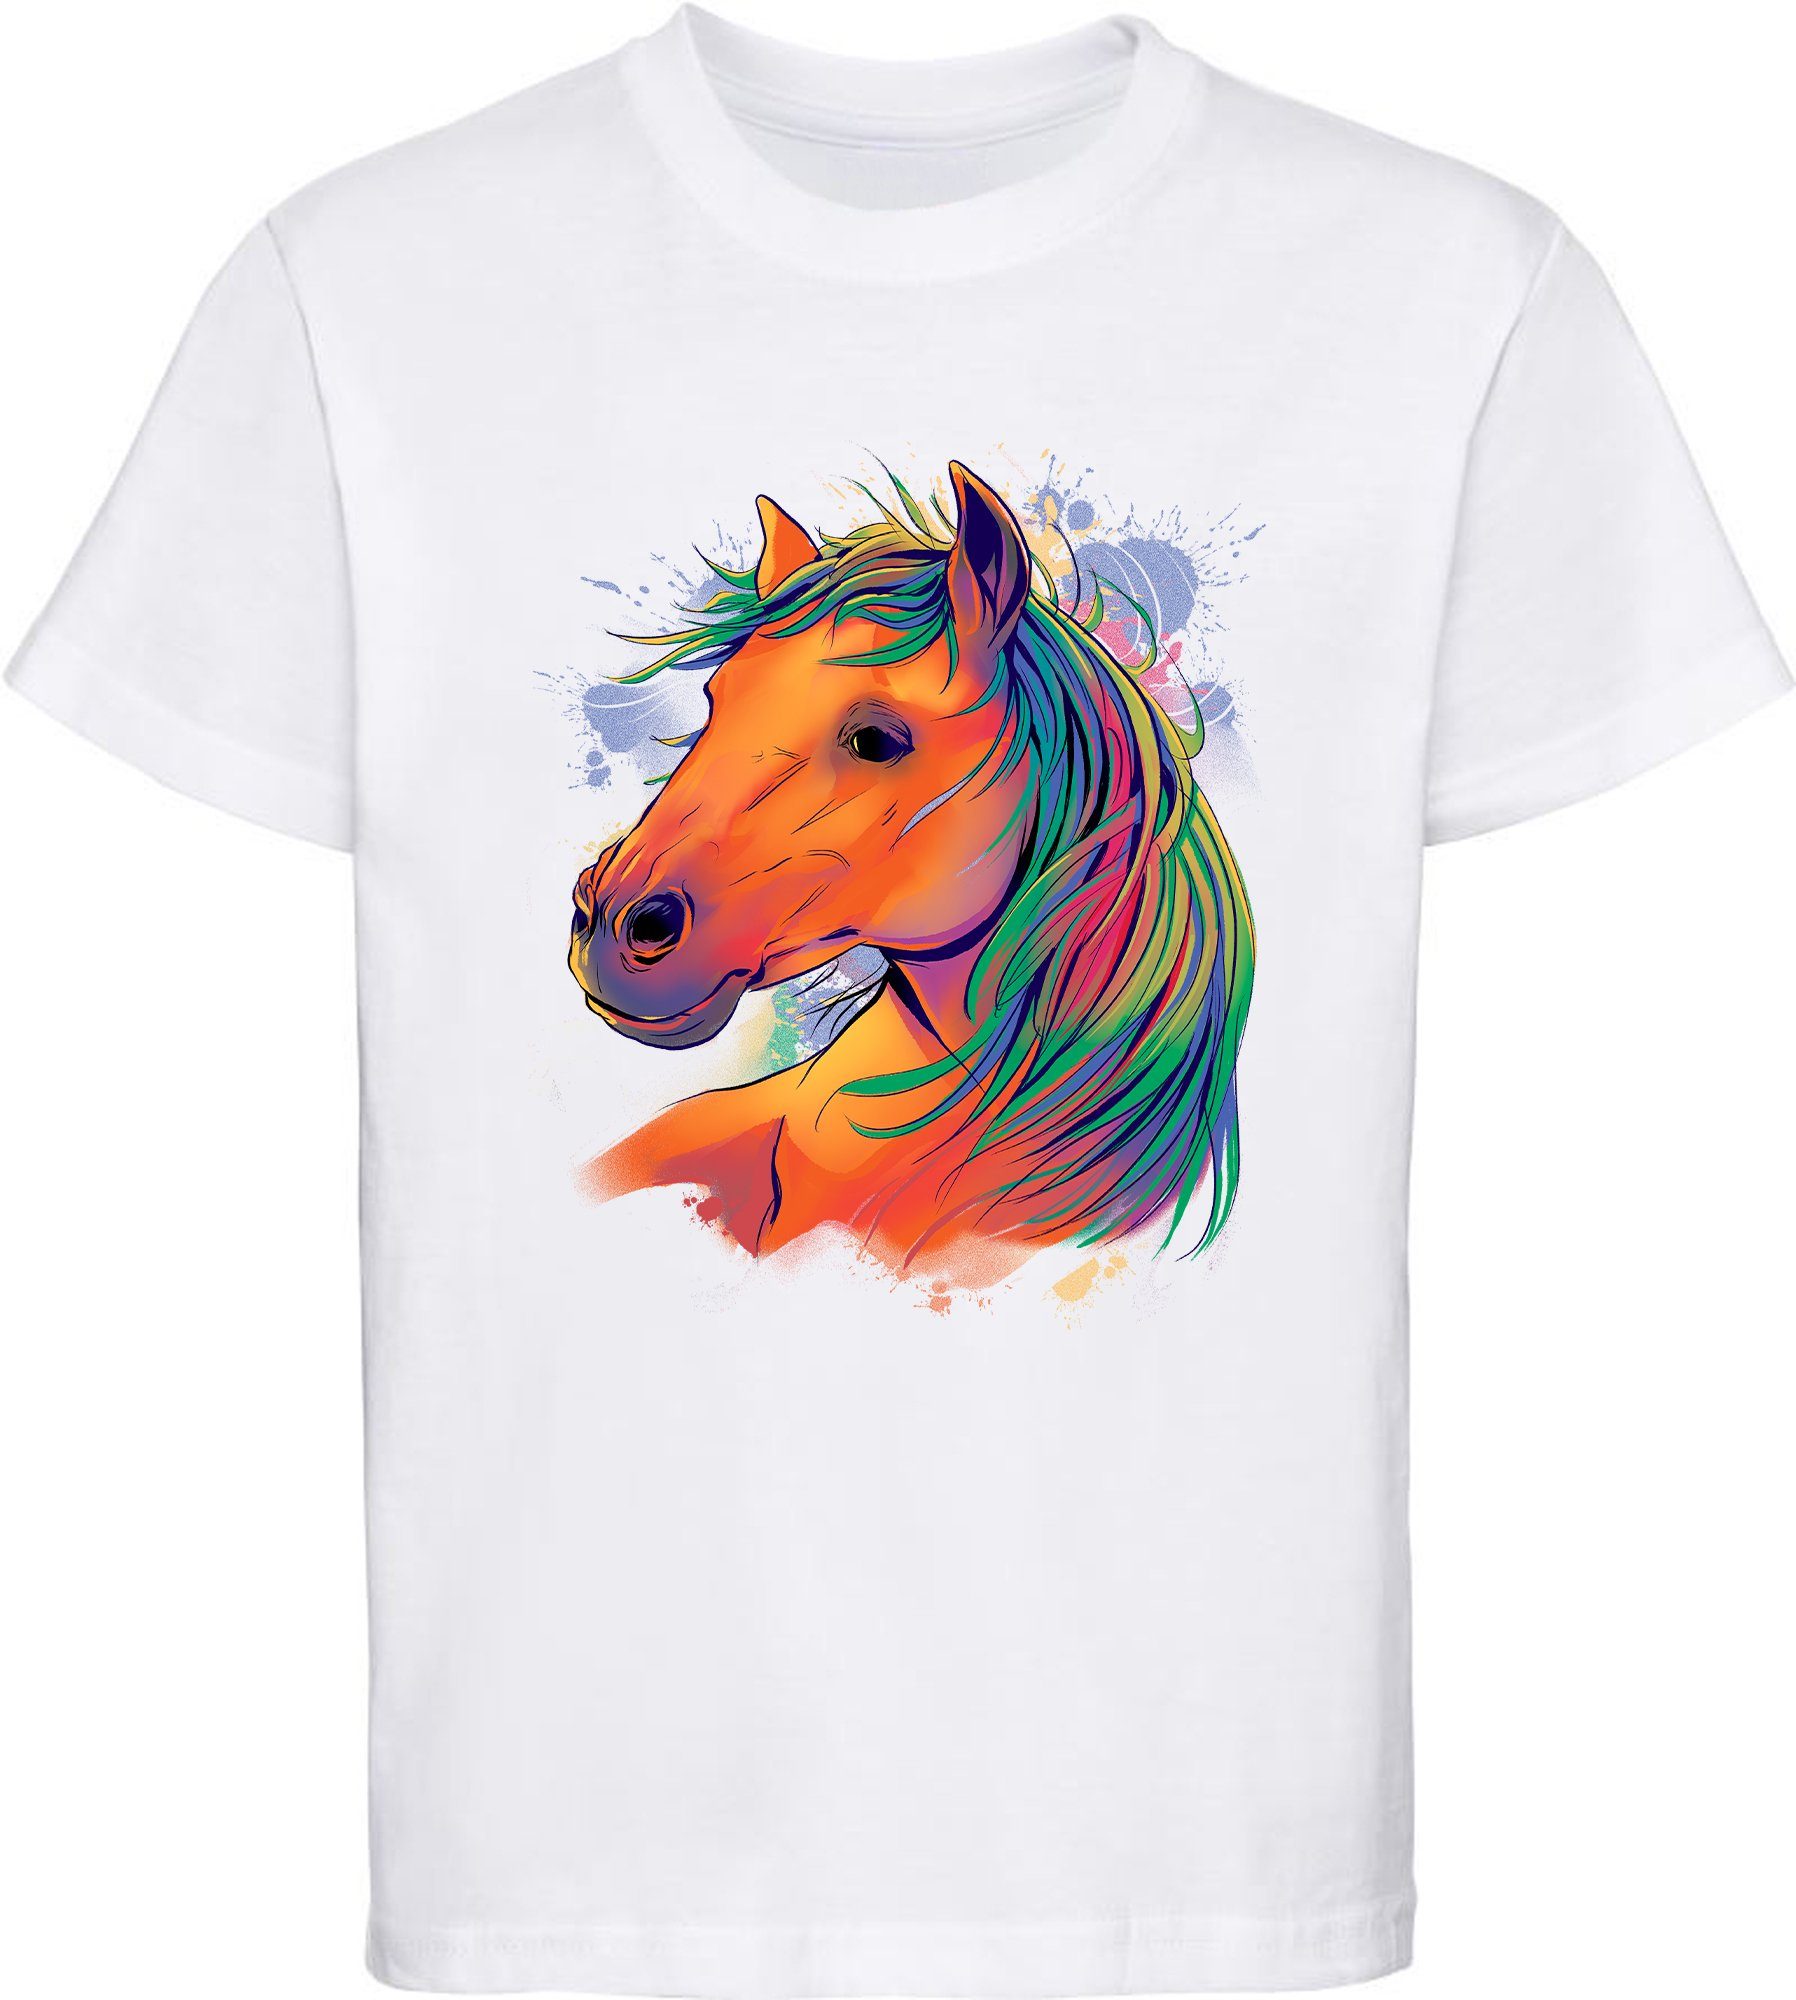 MyDesign24 Print-Shirt bedrucktes Mädchen T-Shirt - Pferdekopf in Ölfarben Baumwollshirt mit Aufdruck, i167 weiss